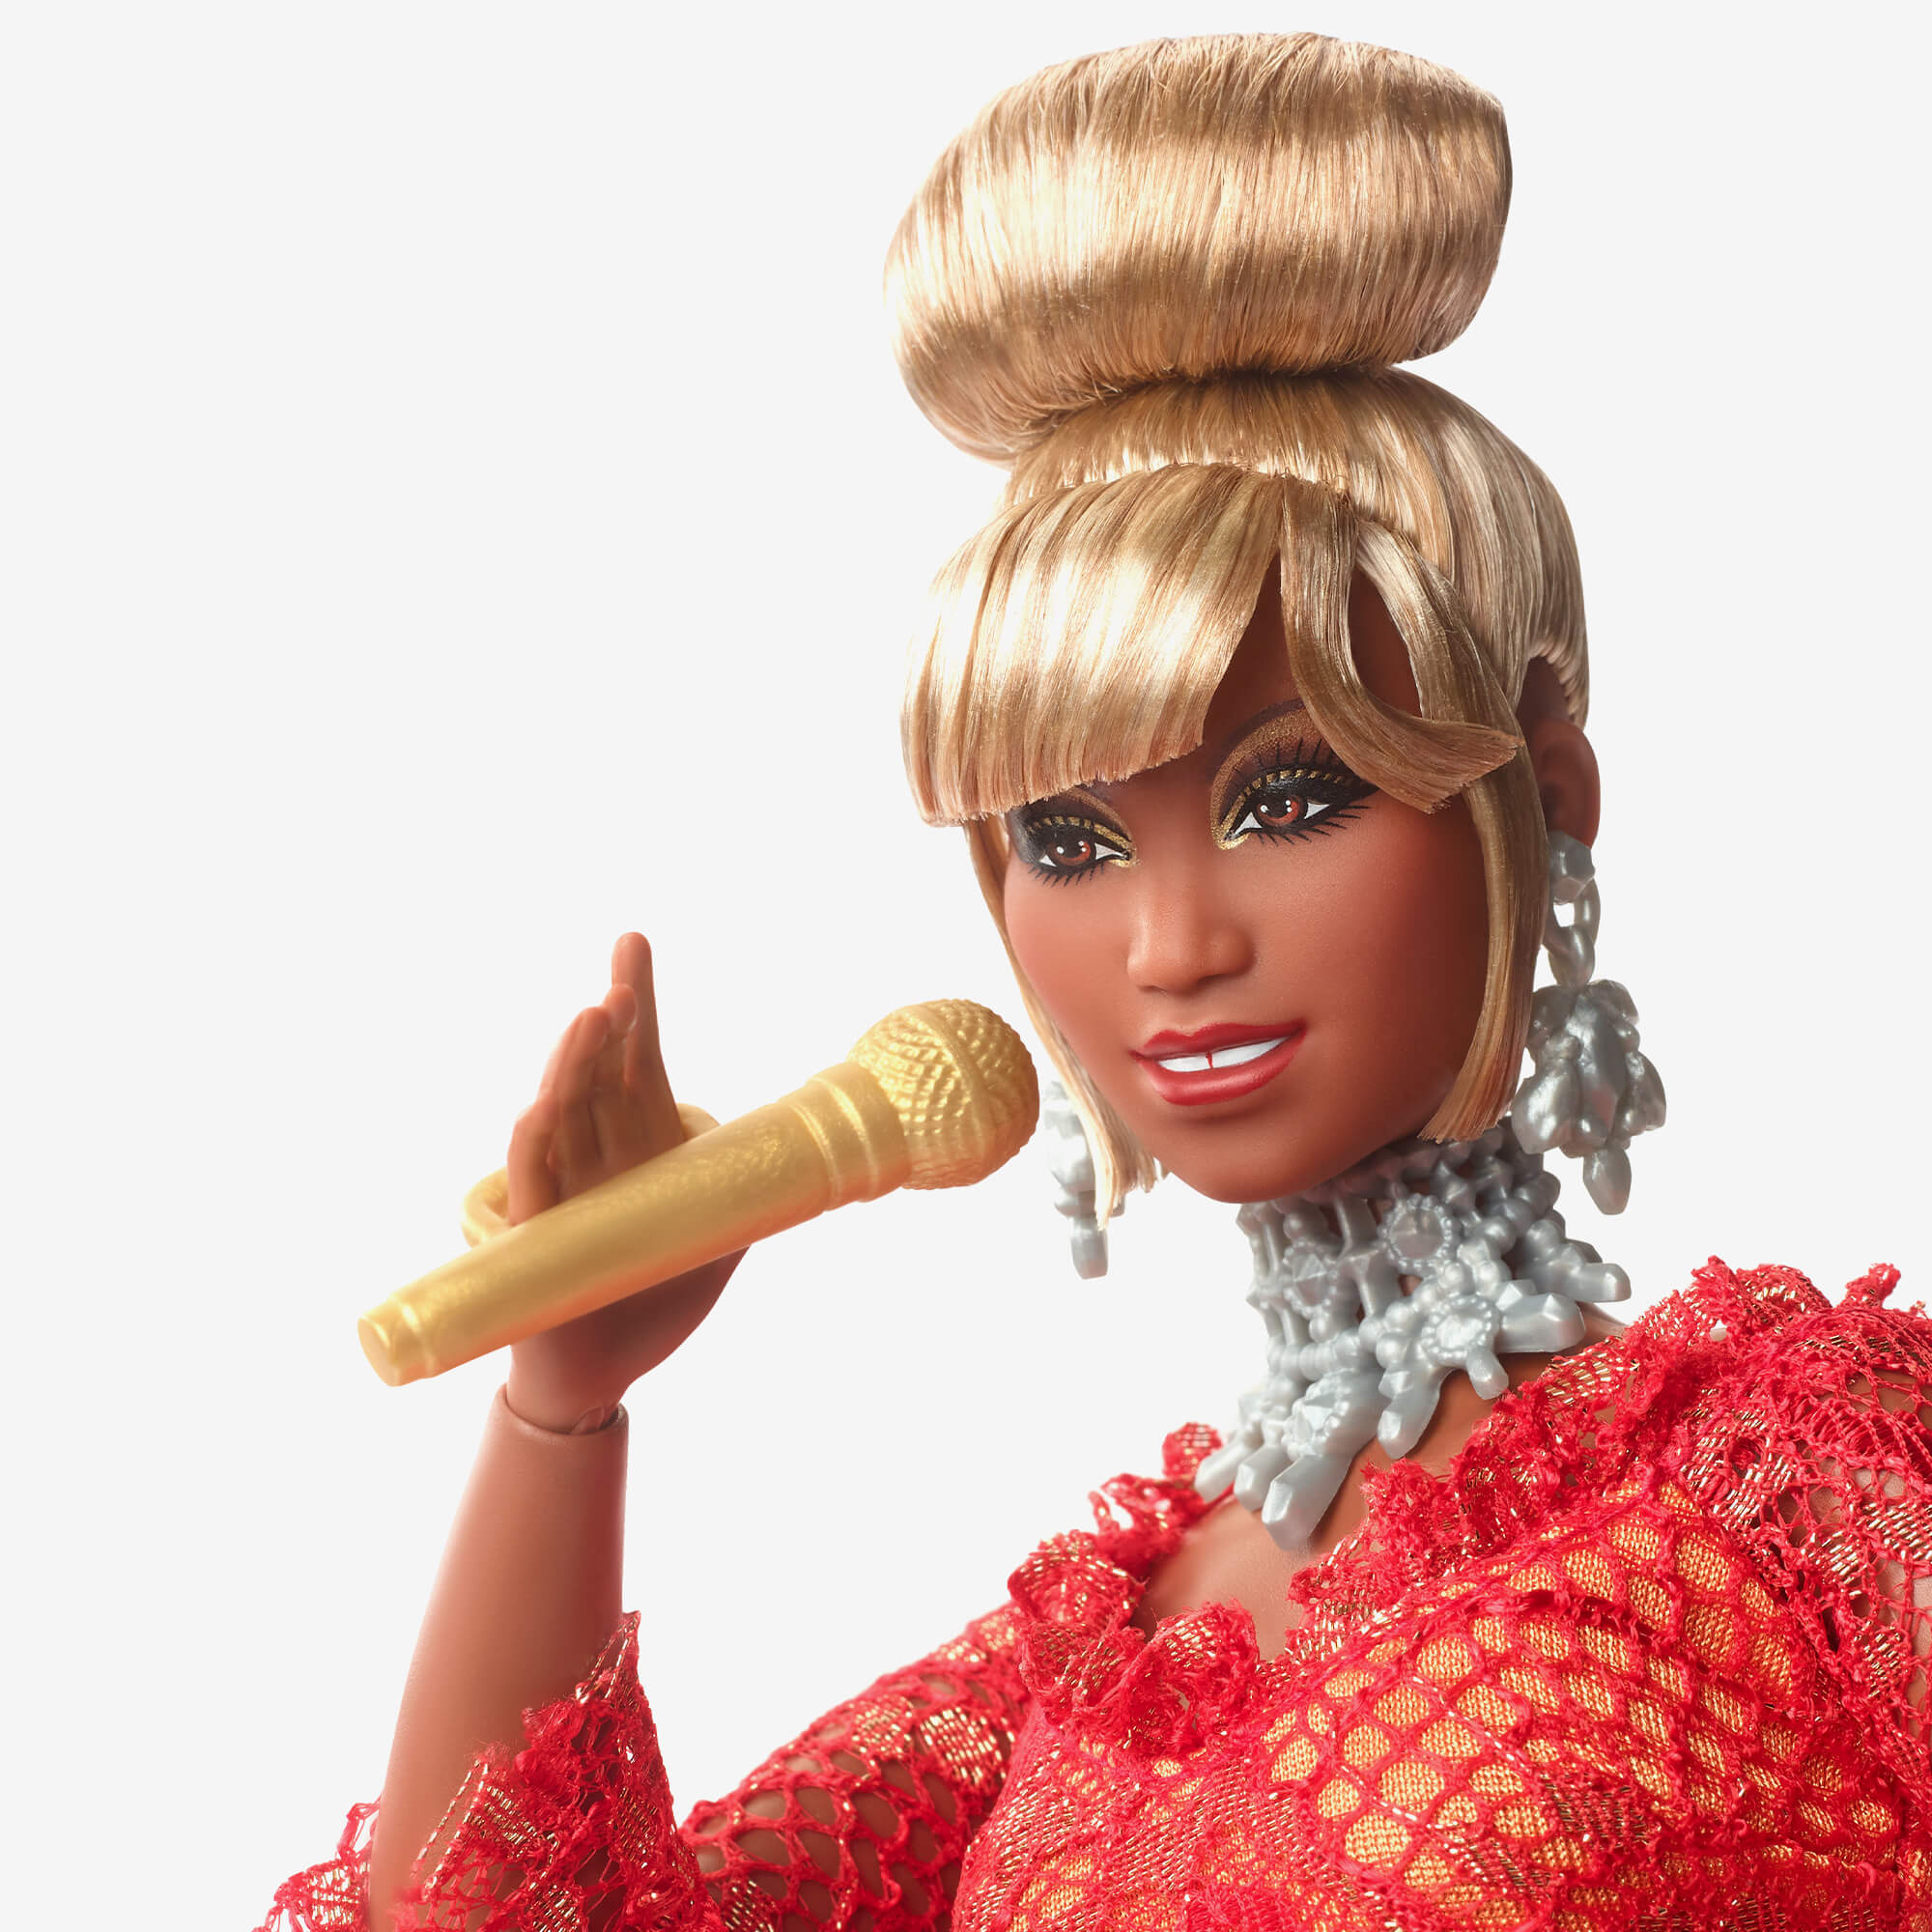 Barbie Inspiring Women Celia Cruz Doll (IN STOCK)